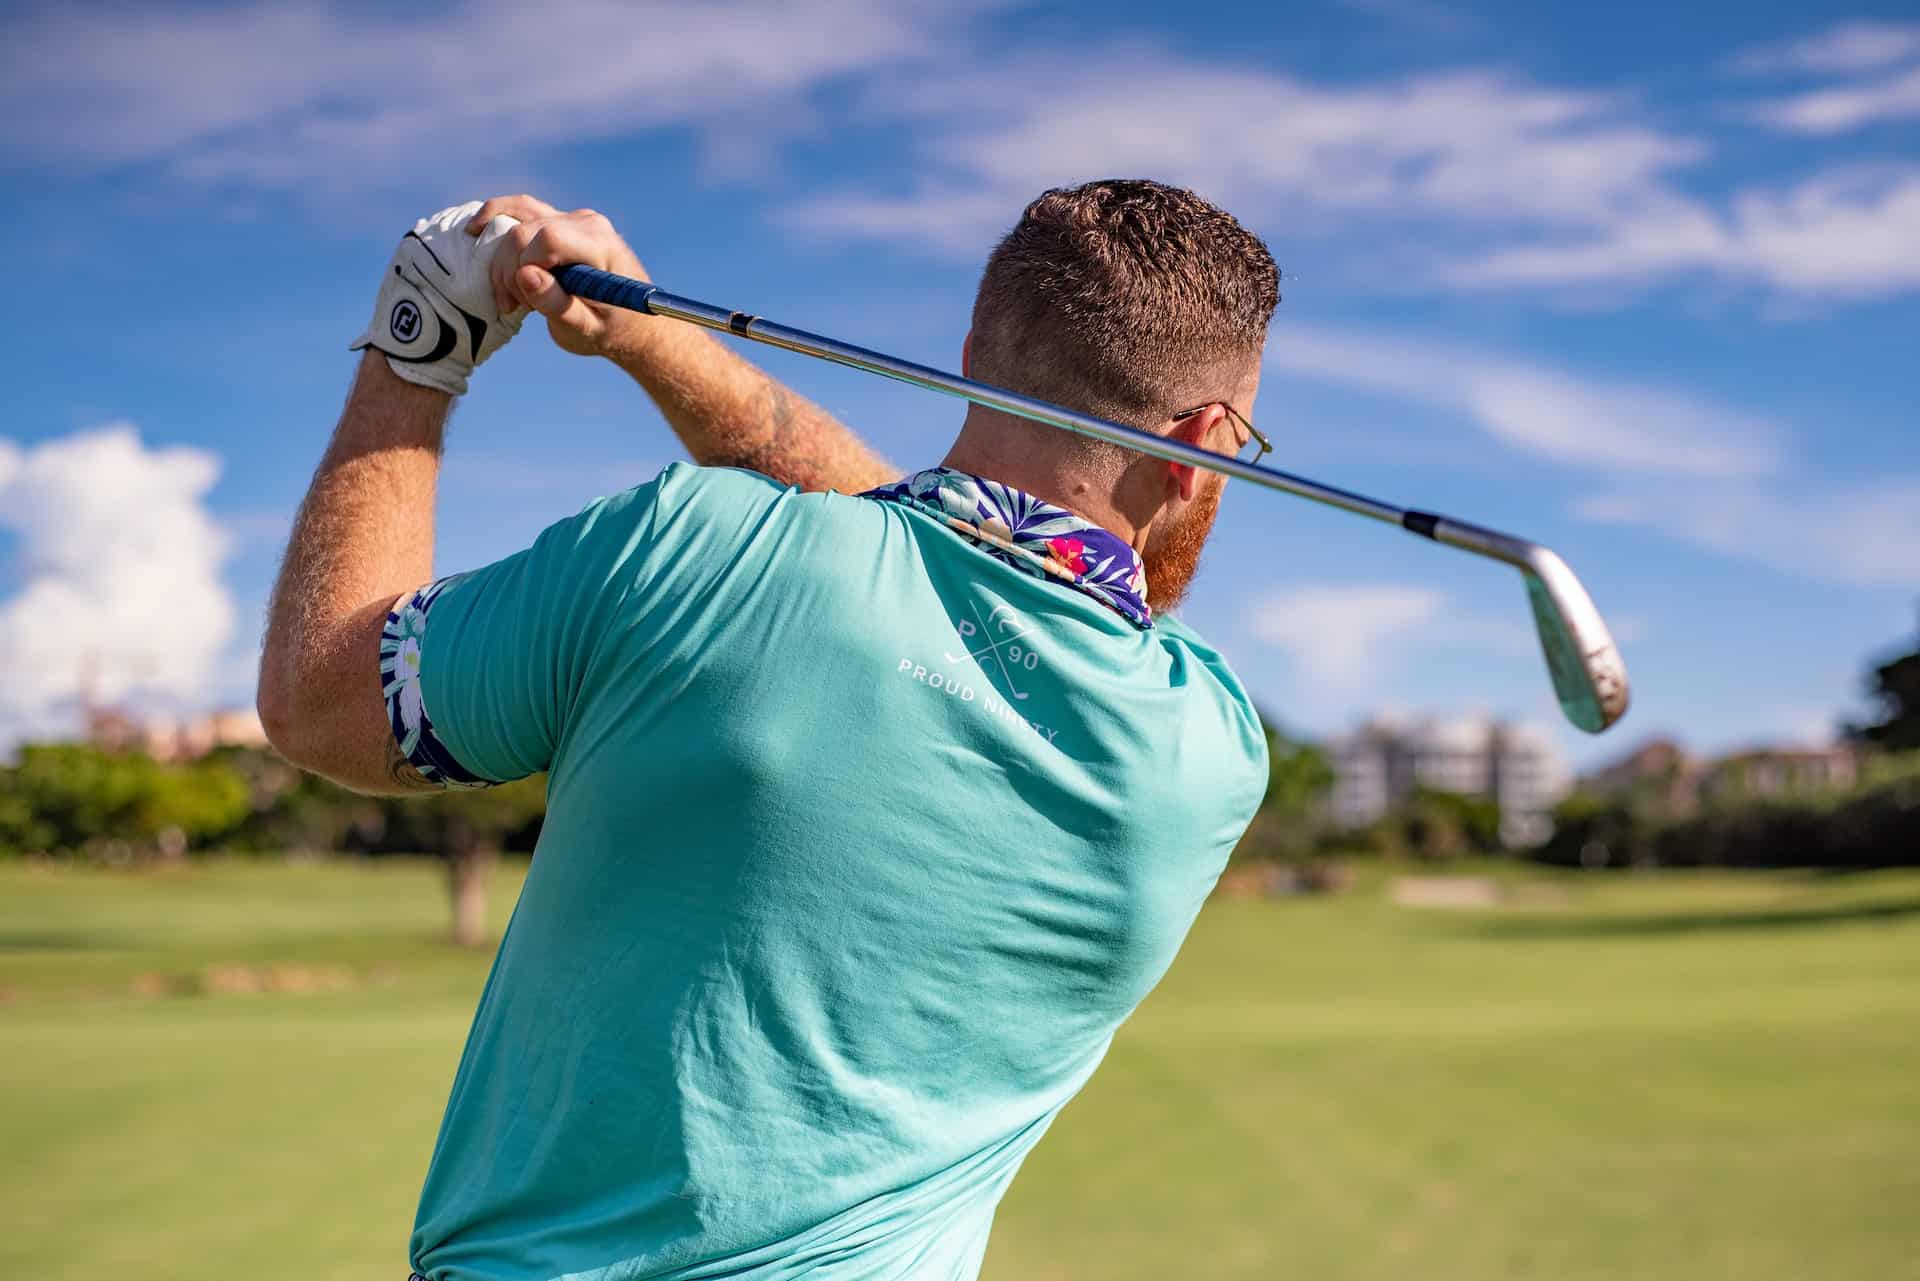 a man golfing as a hobby